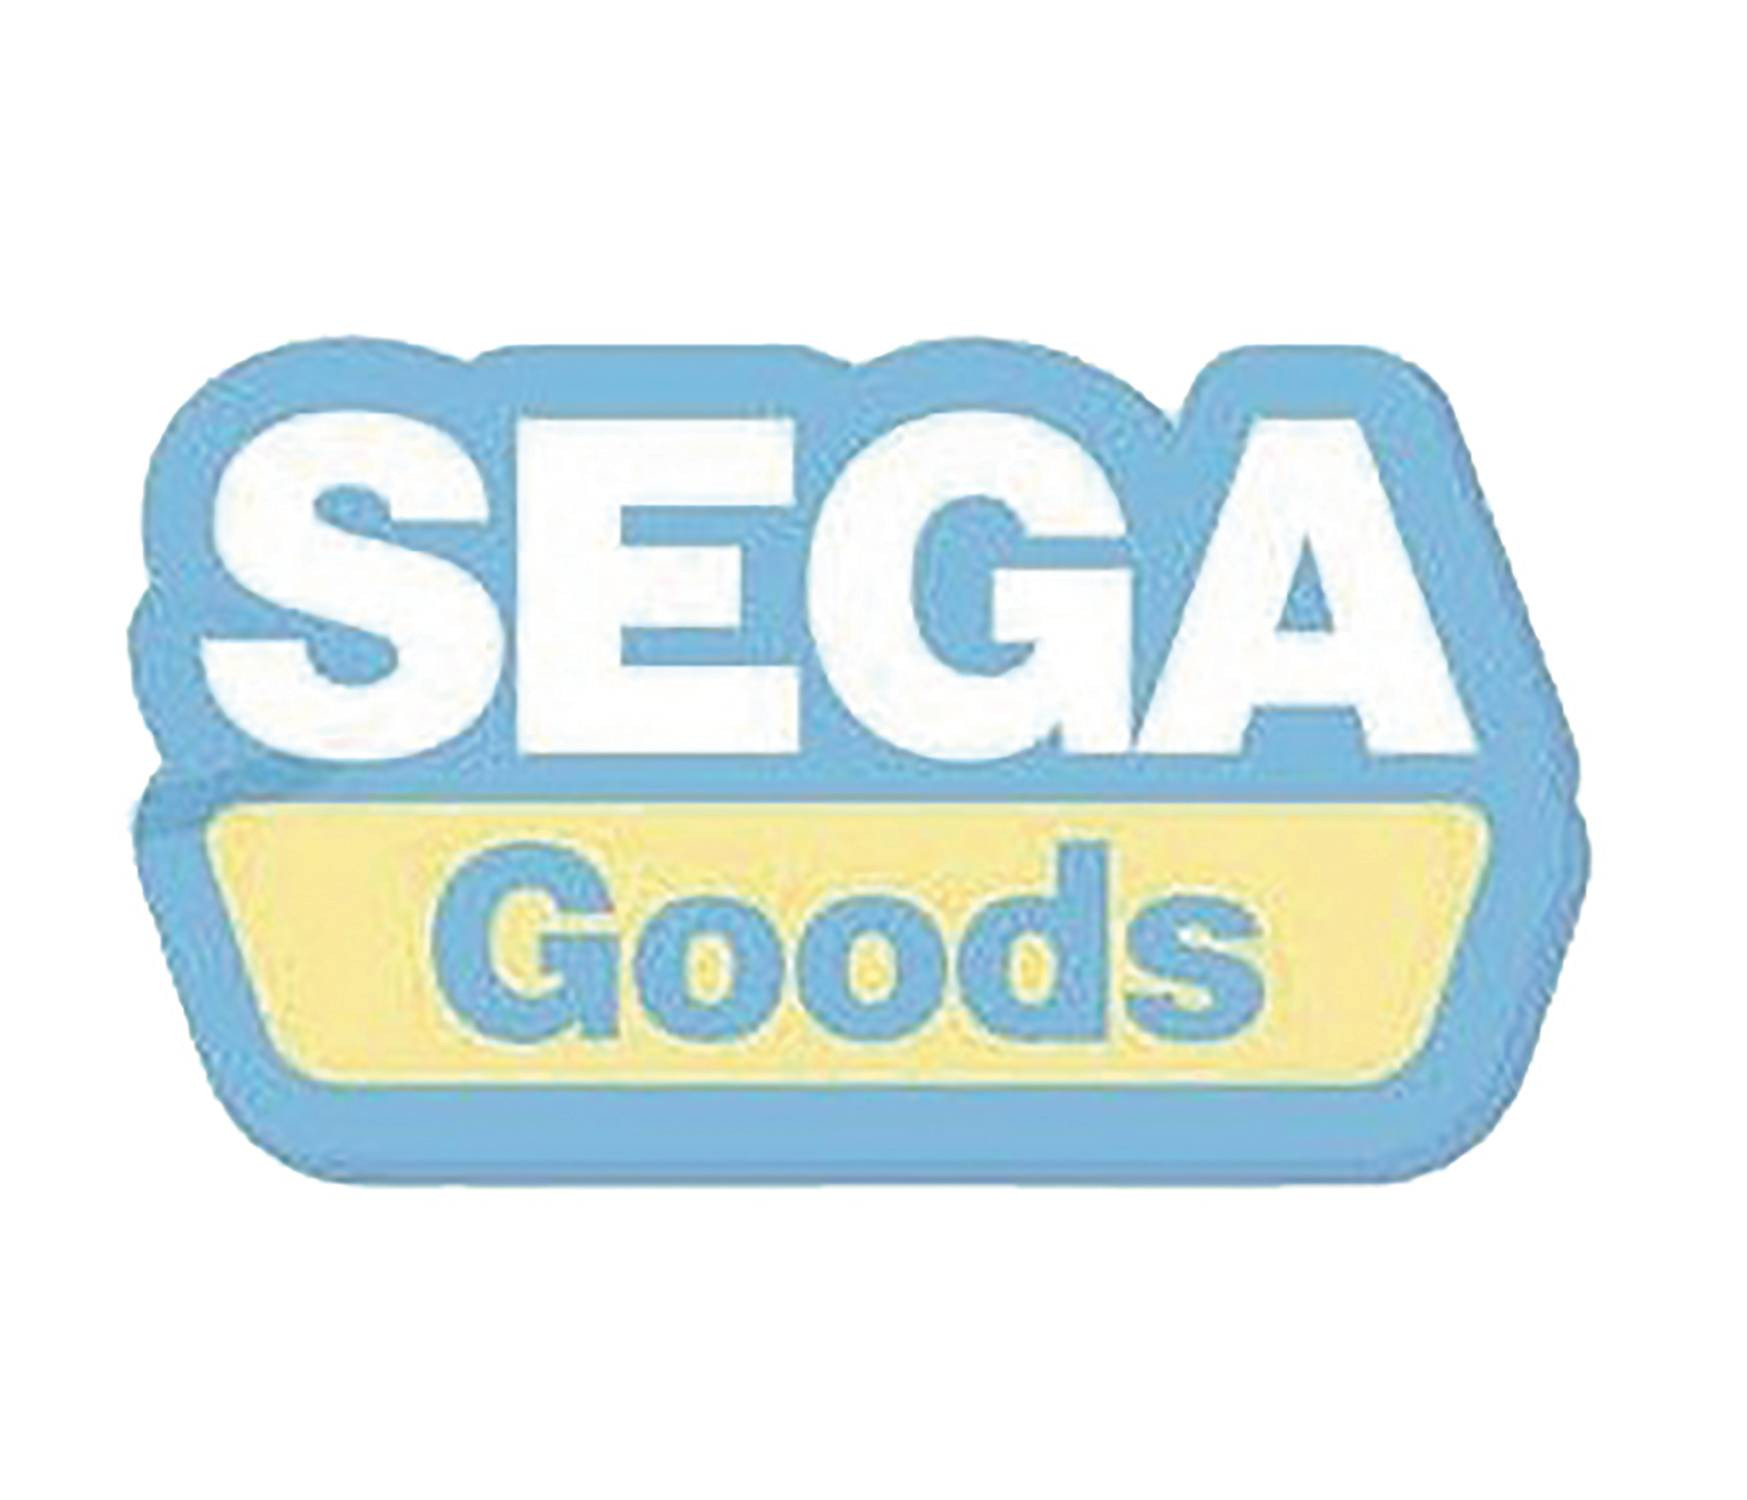 Sega Goods